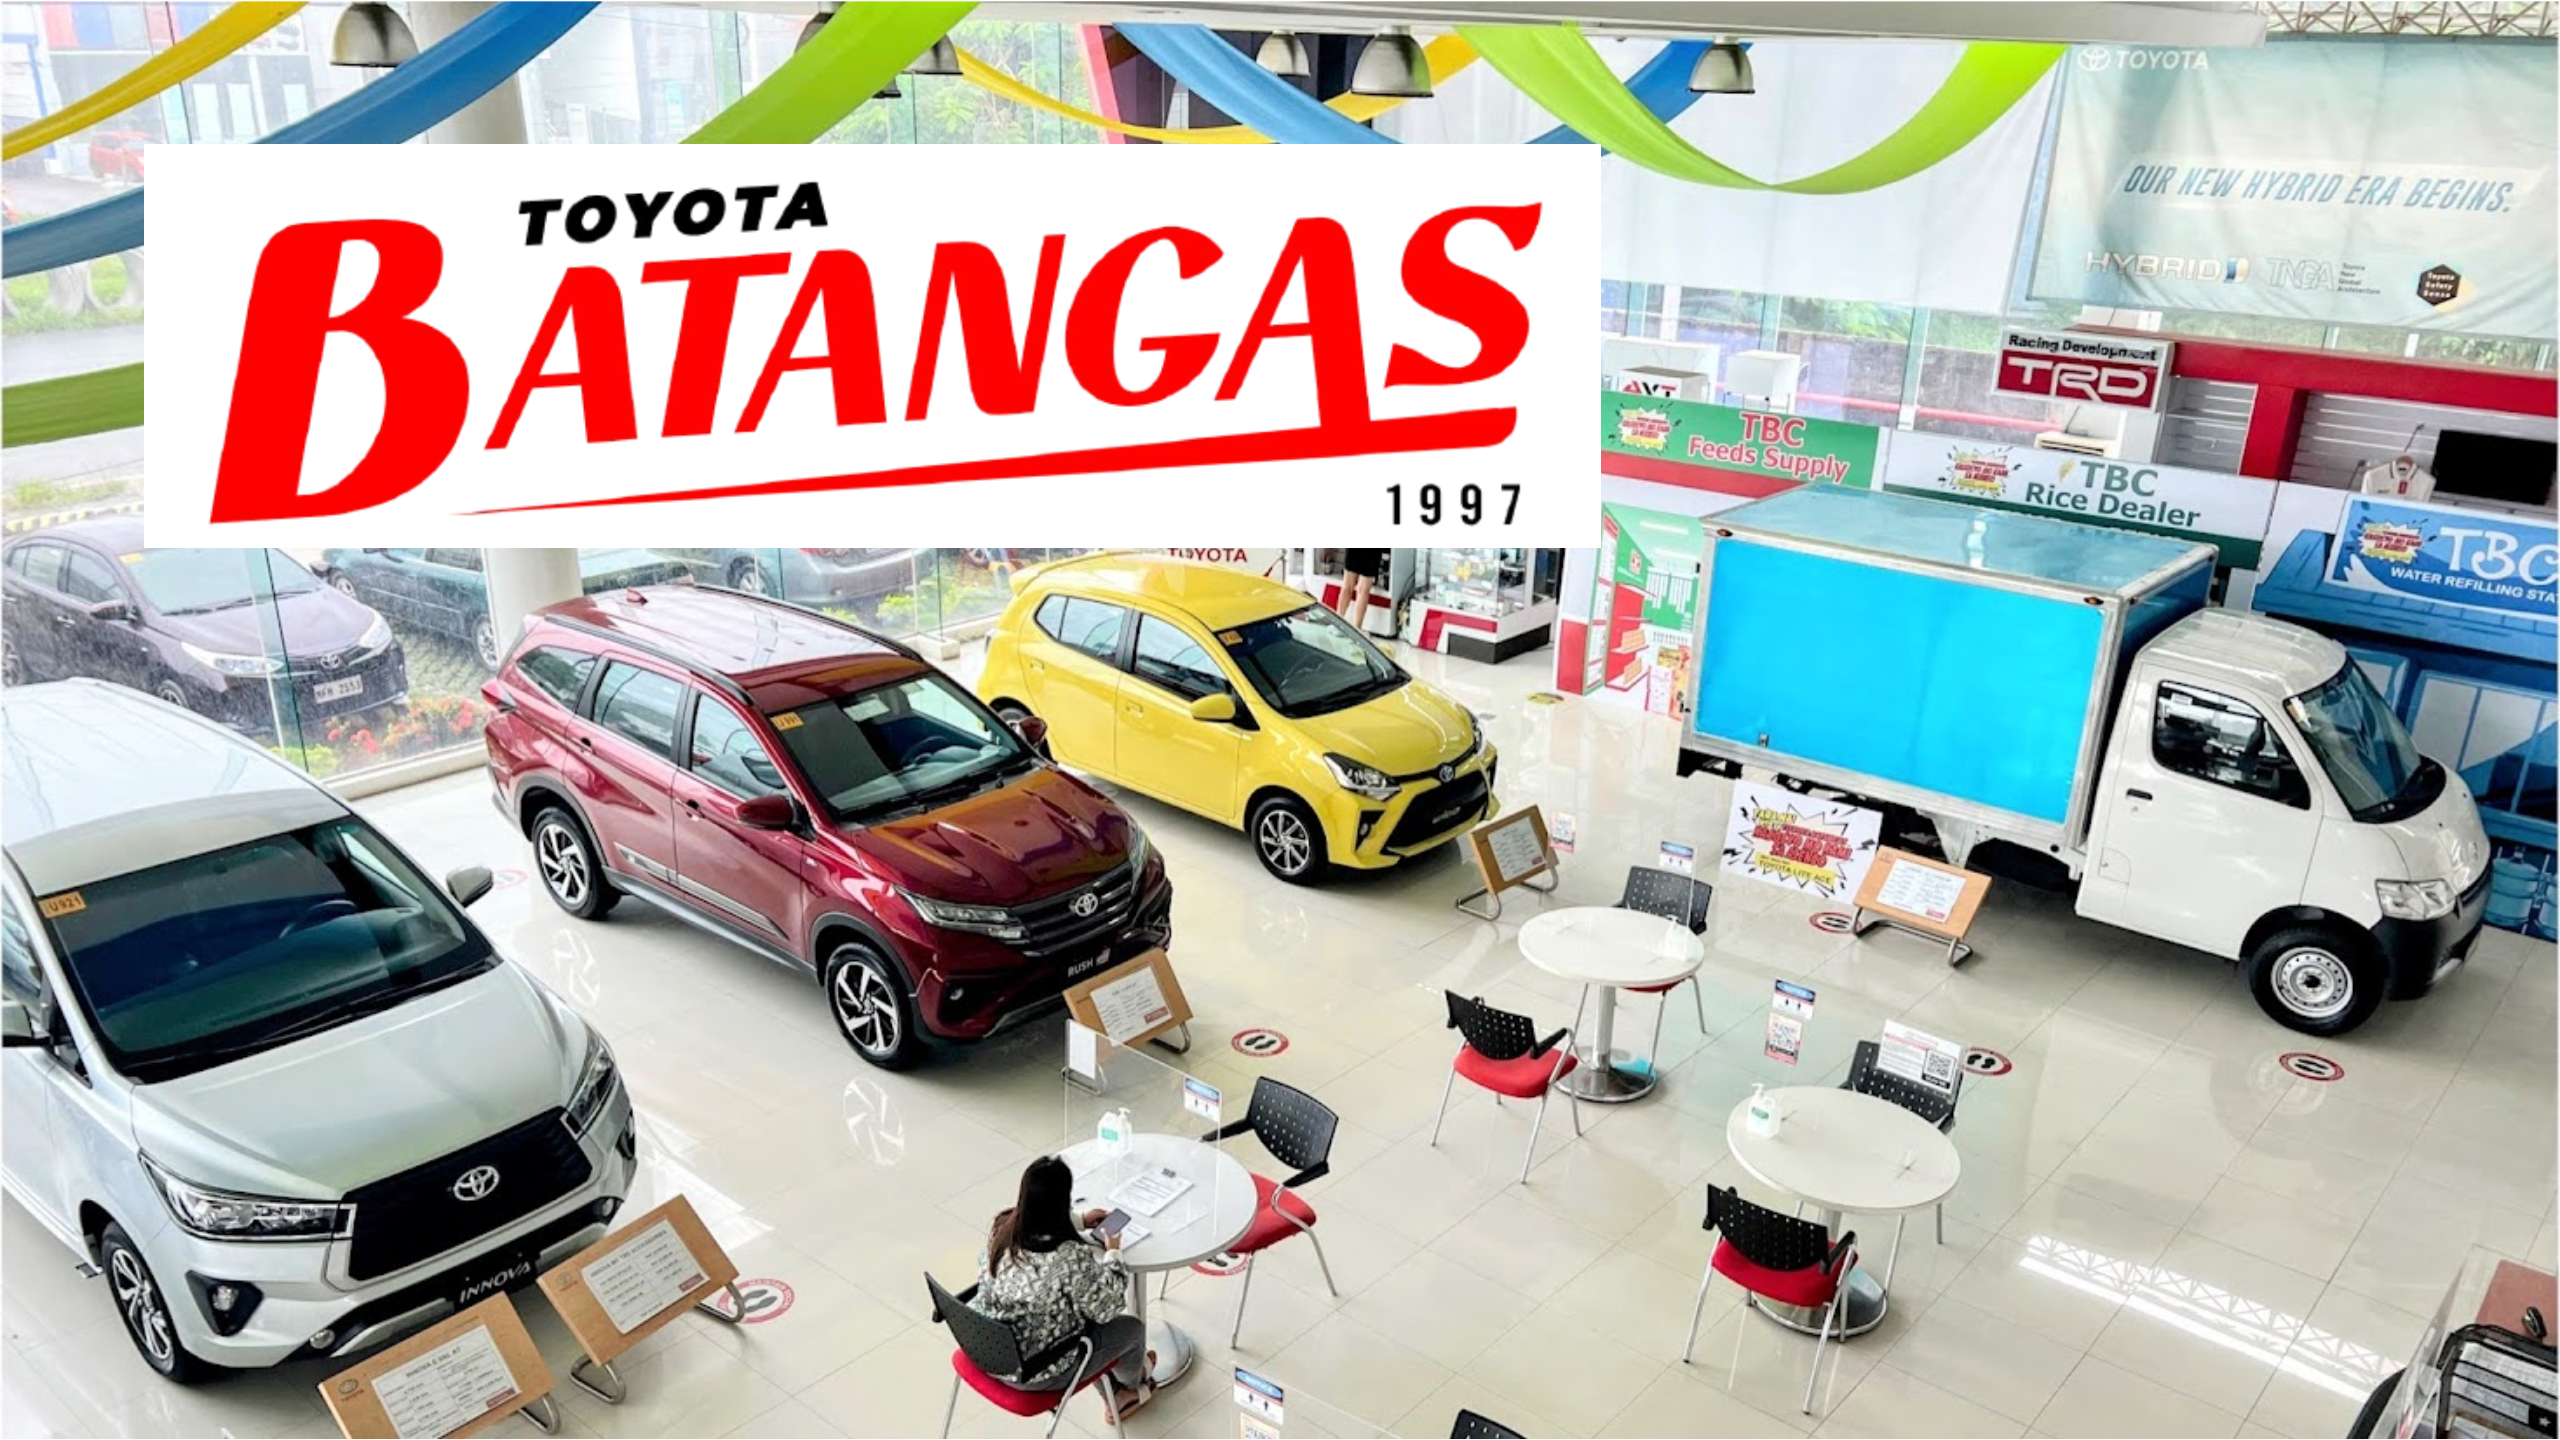 Toyota Batangas City- Vehicle Pricelist, Deals & Promos